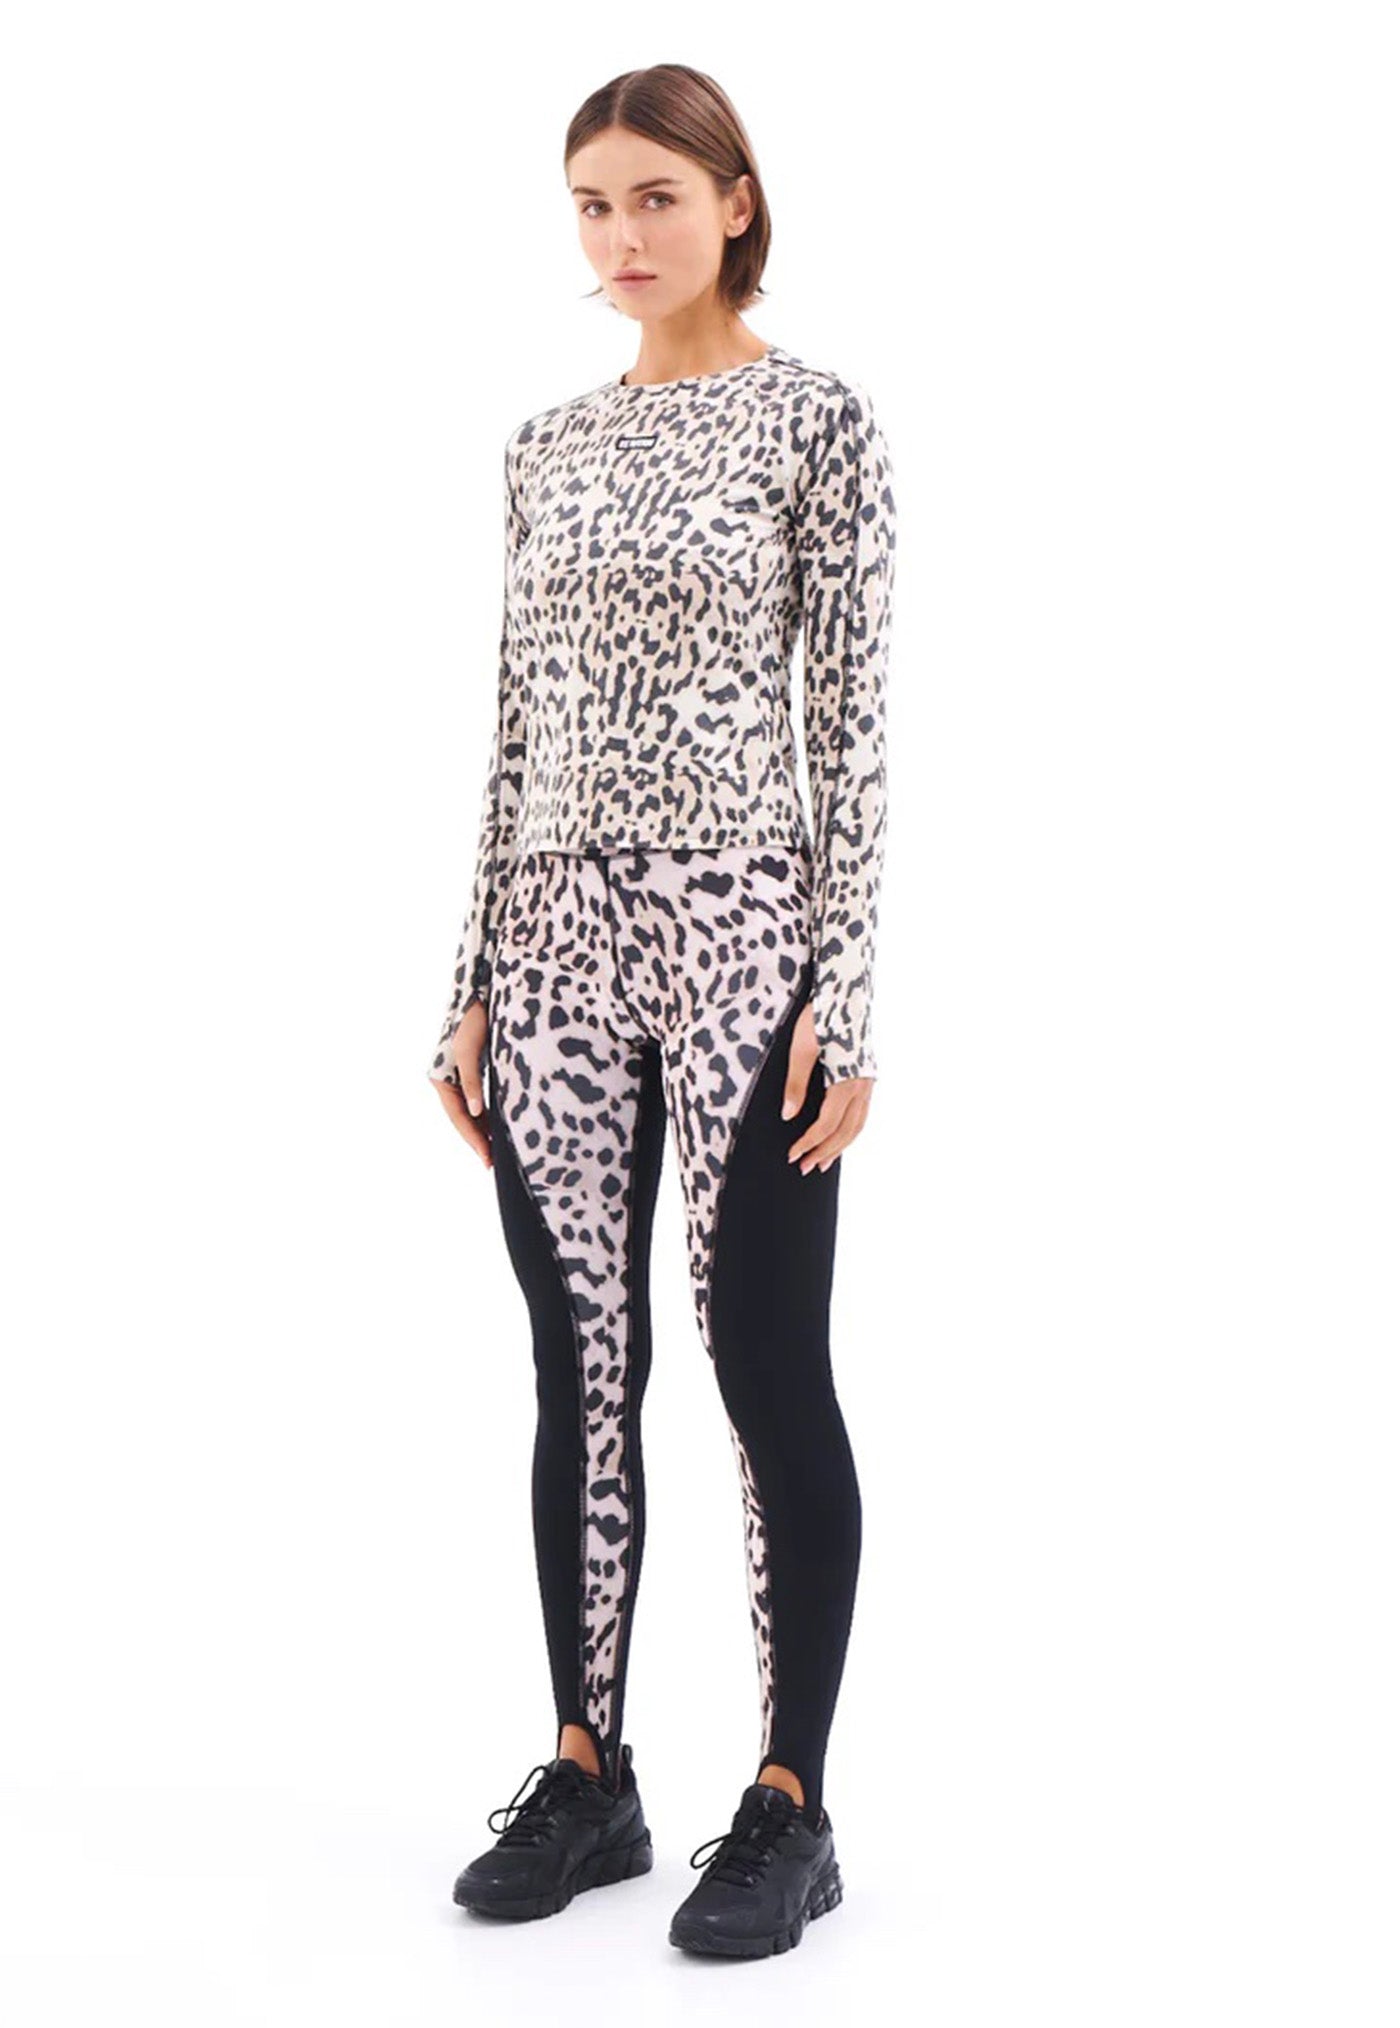 Slalom Printed Legging - Leopard sold by Angel Divine